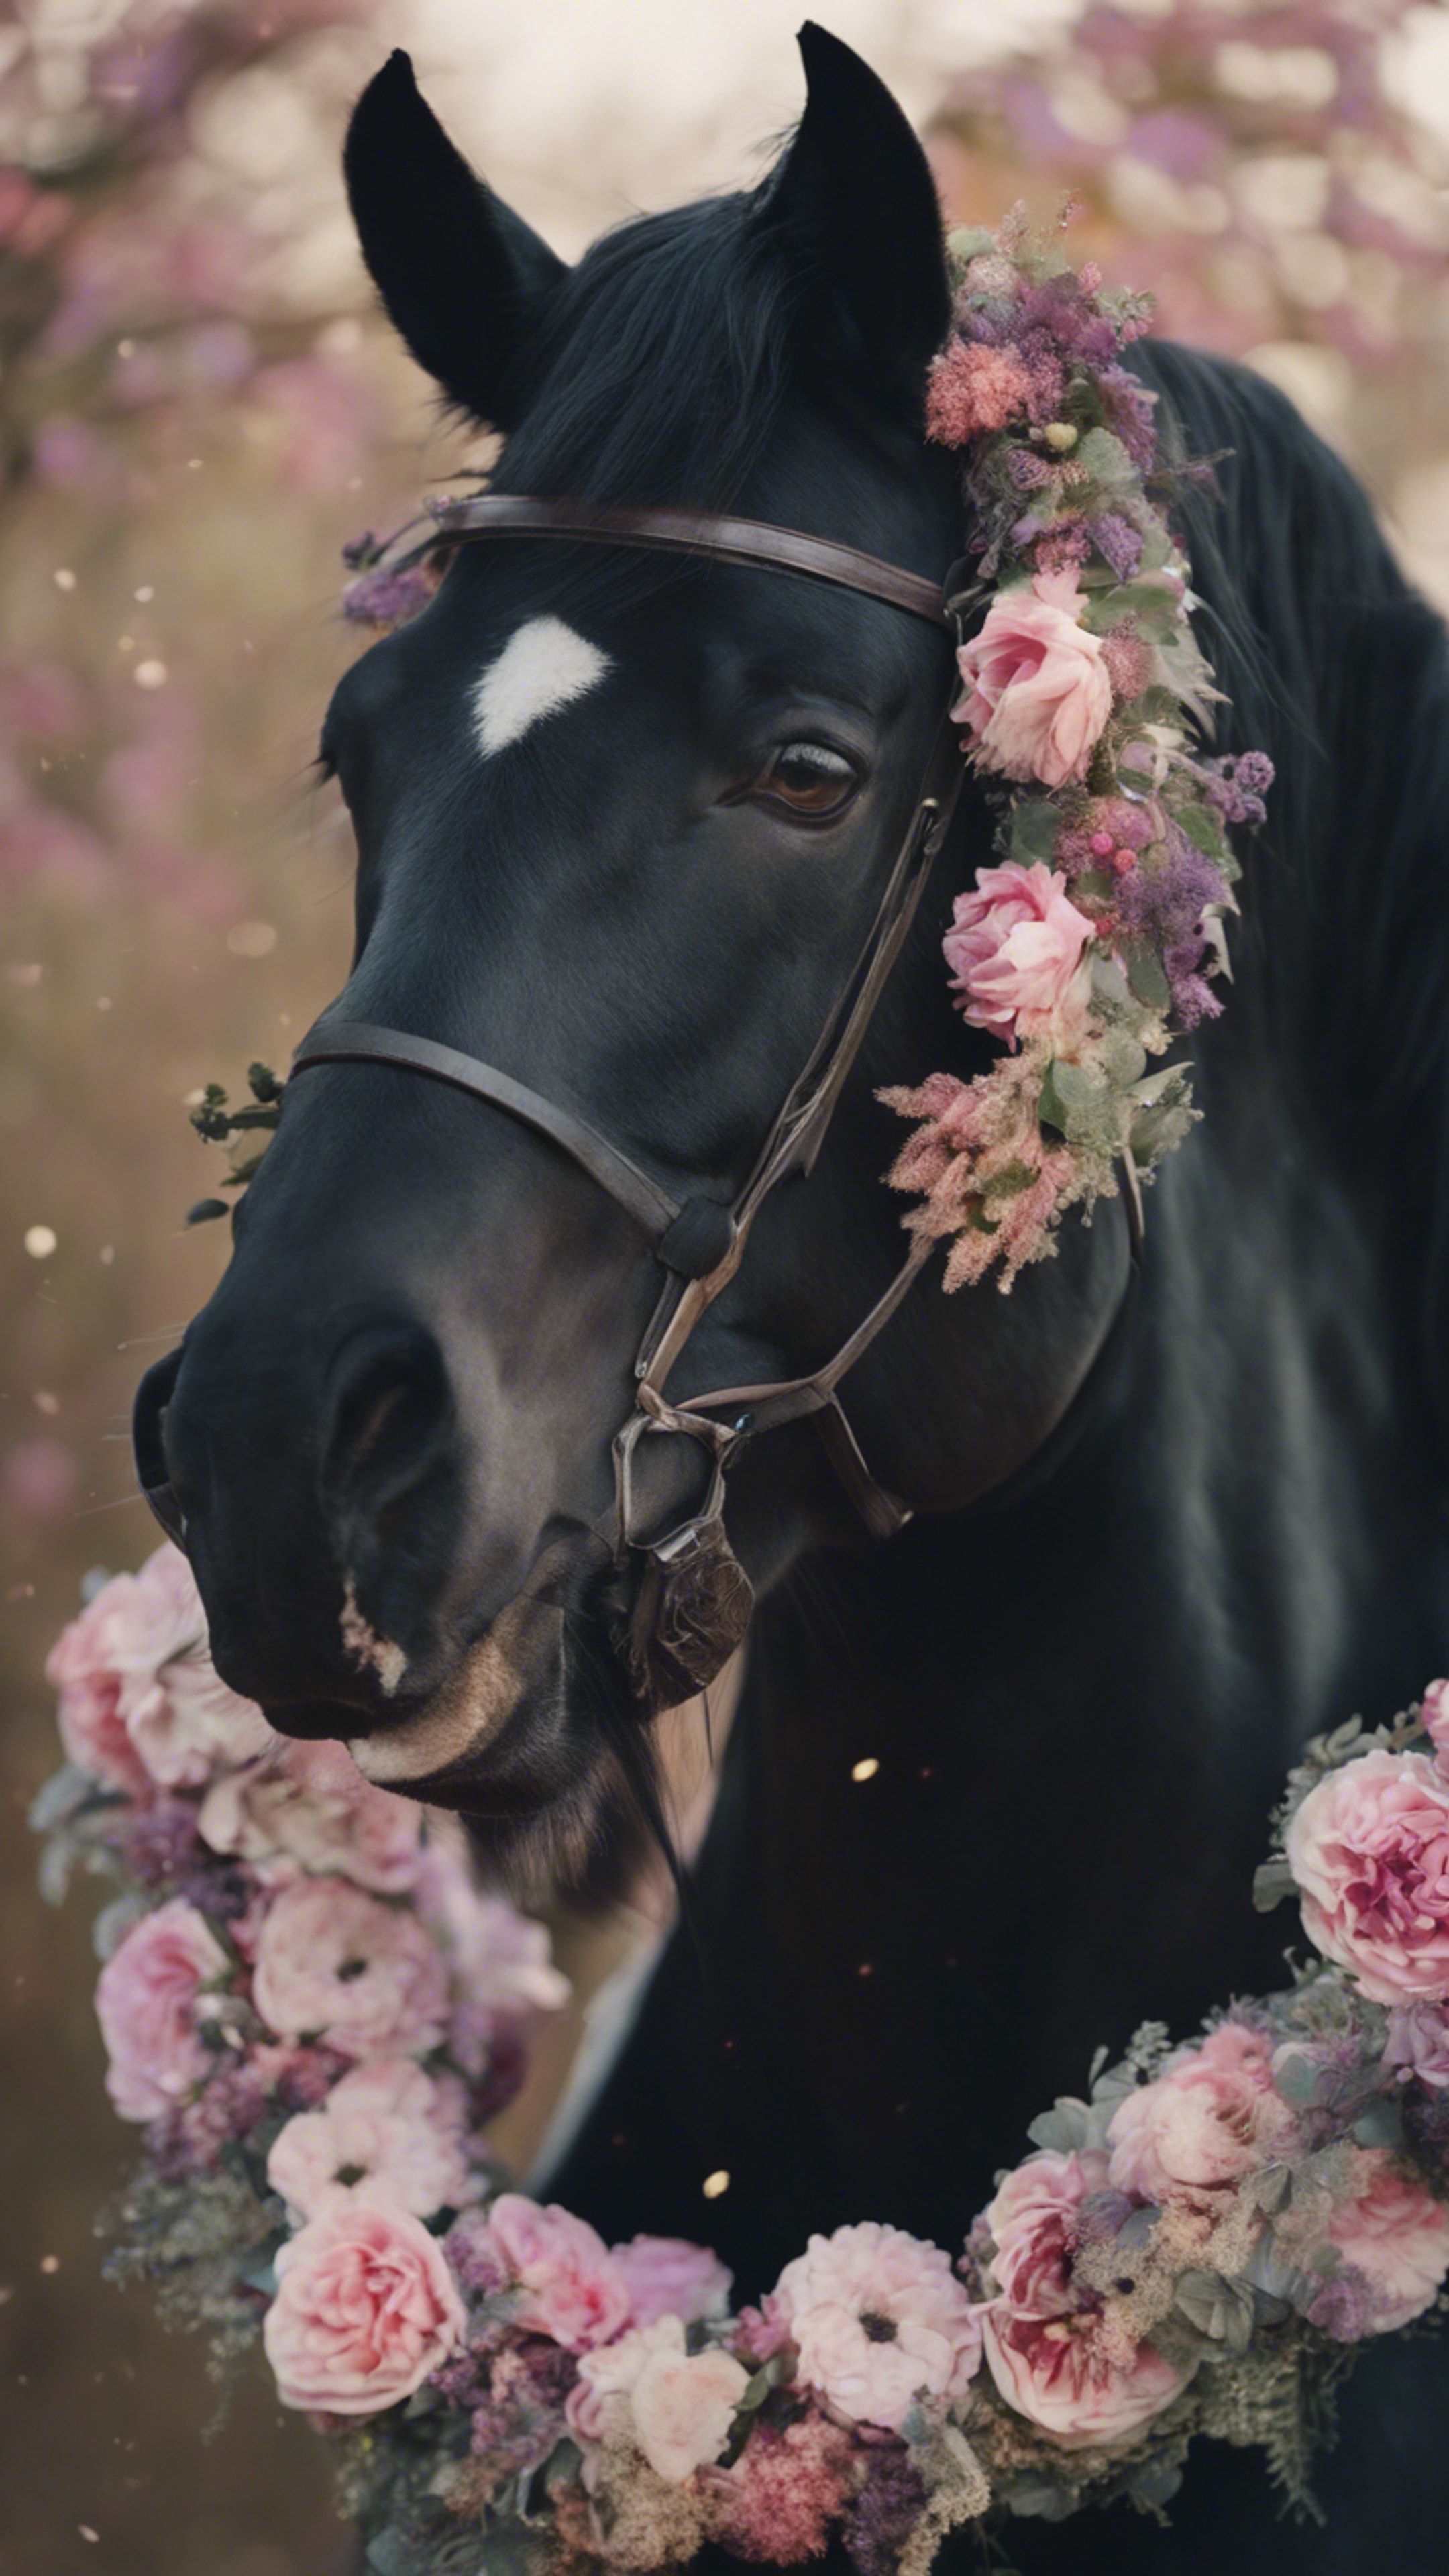 An ebony black stallion with a garland of dark flowers around its neck.壁紙[4b718b7da97e47f2826b]